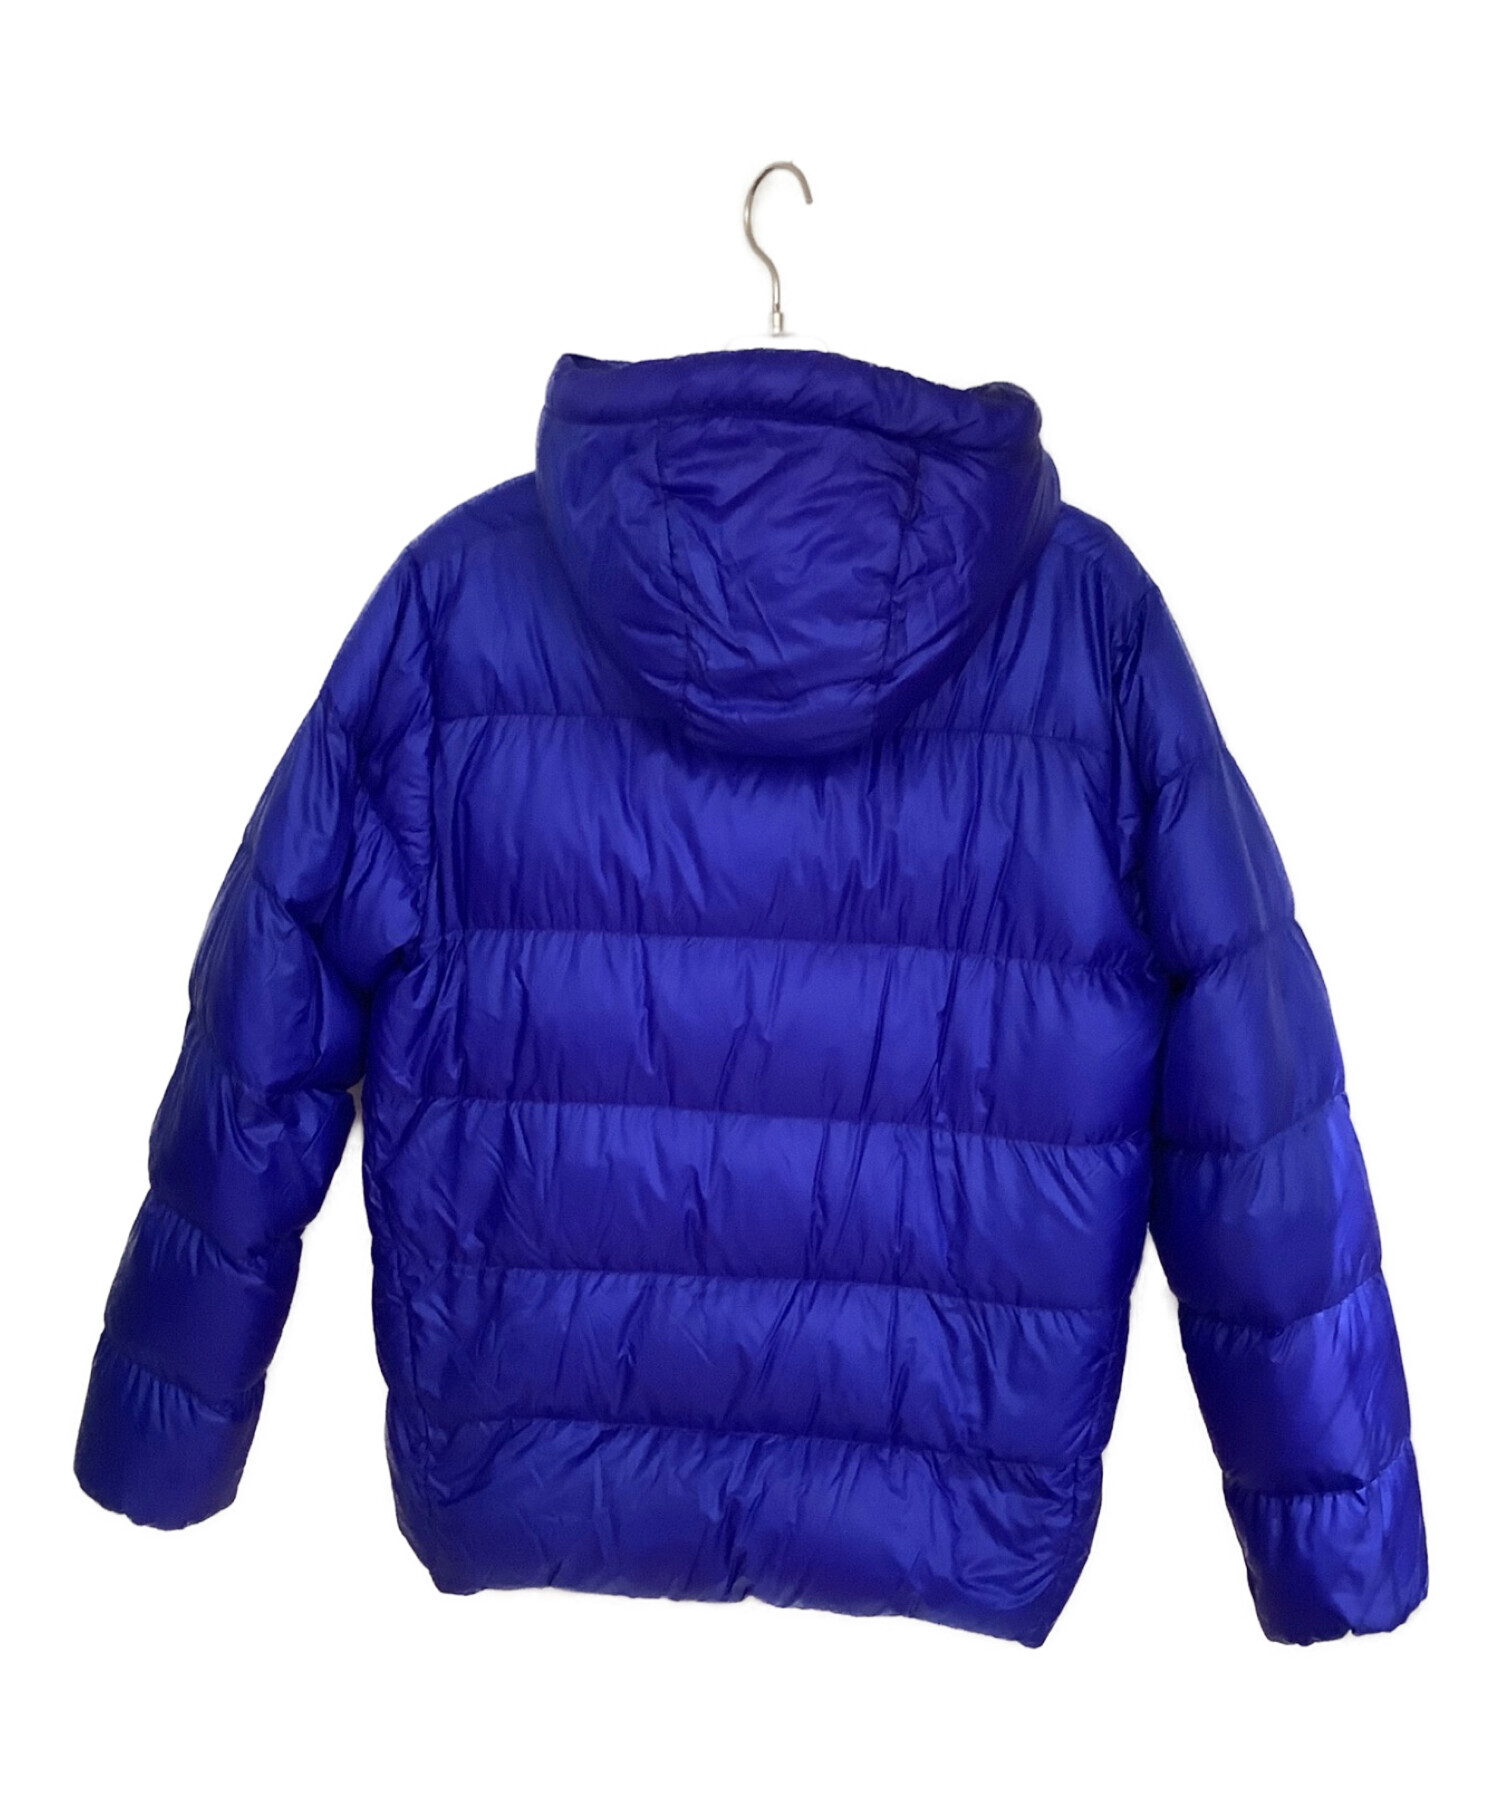 patagoniaダウンジャケットMサイズ袖丈68cm